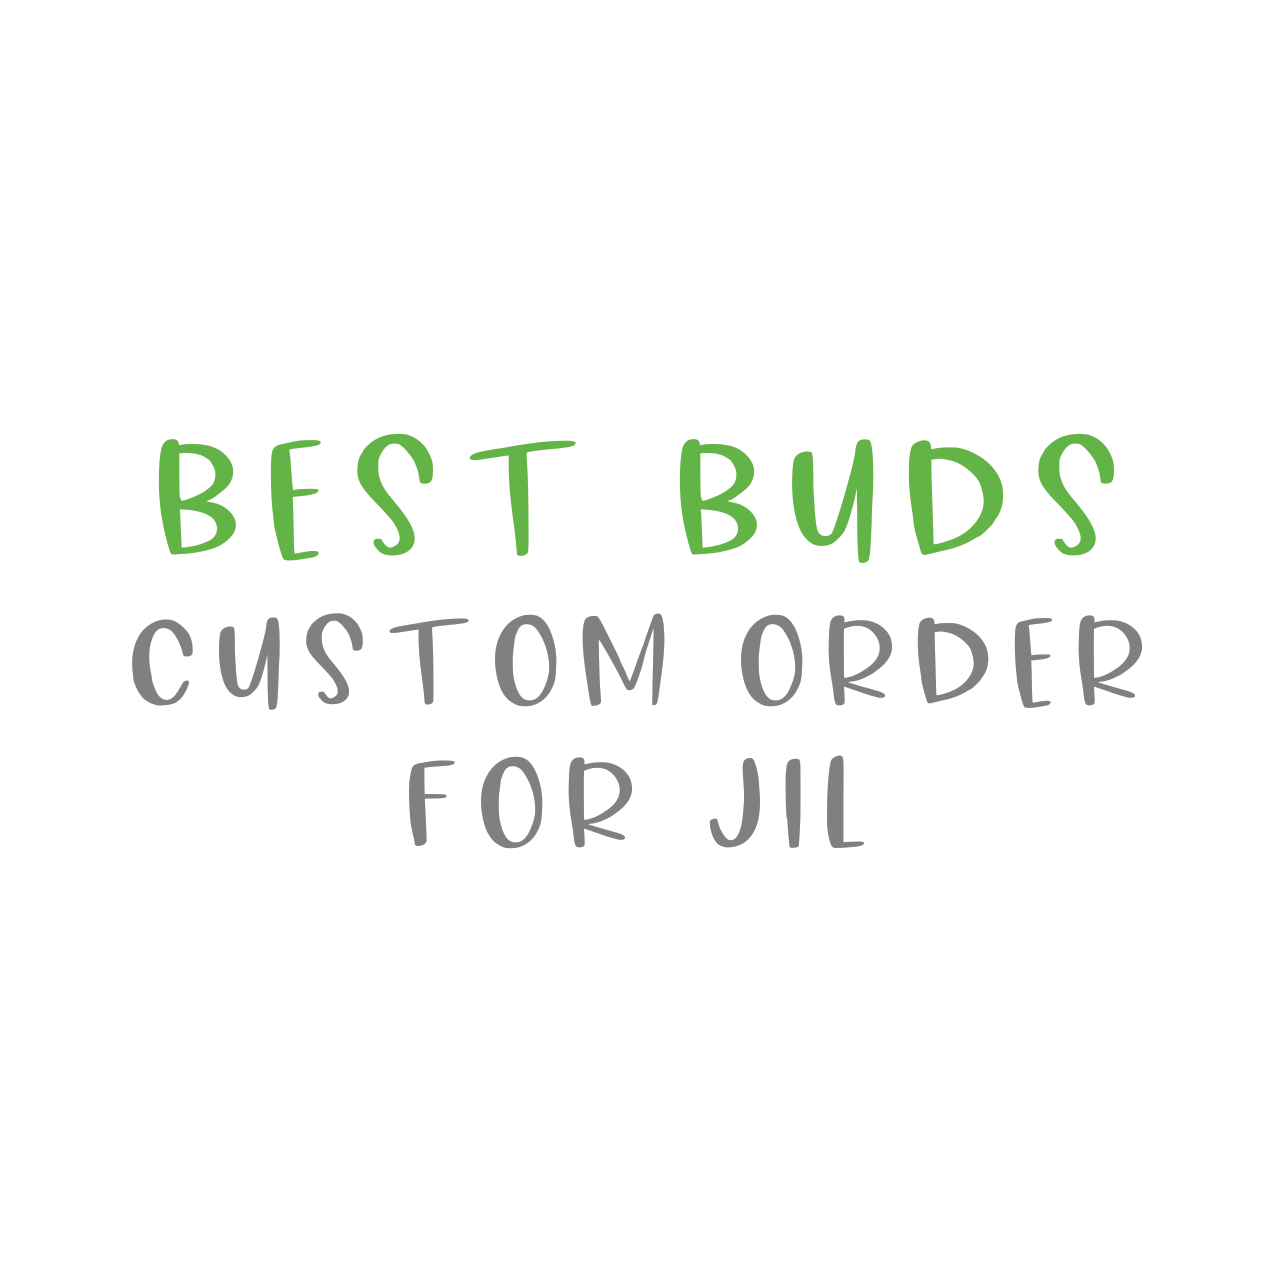 Jil "Best Buds" Custom Order